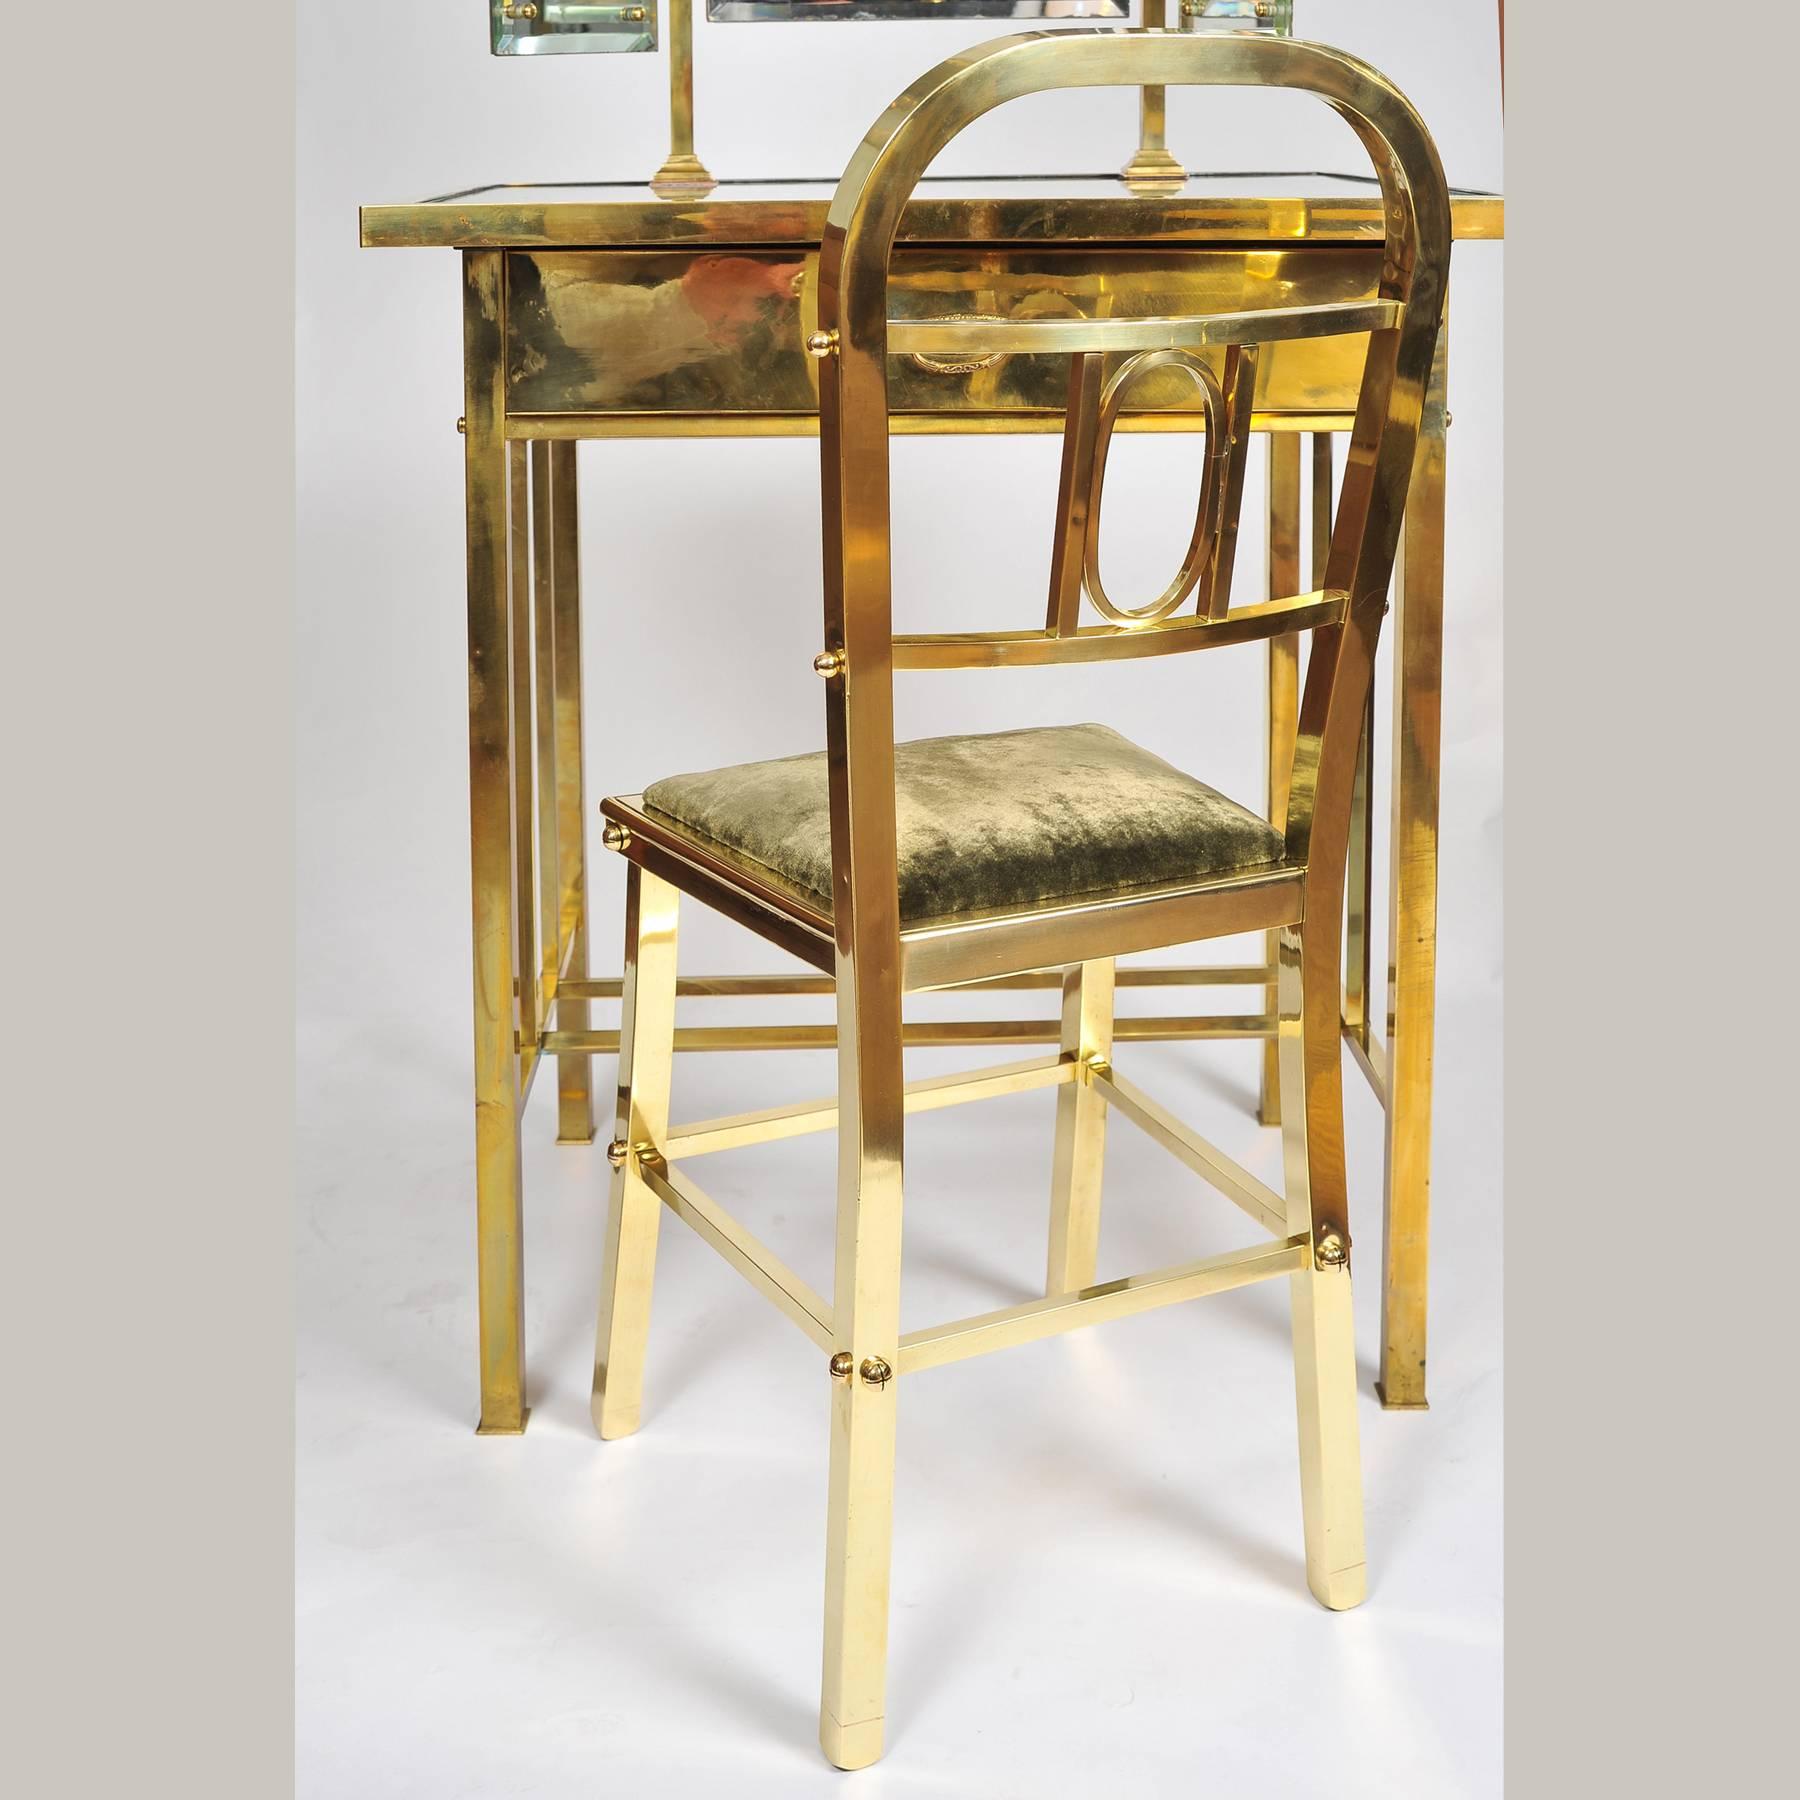 brass vanity table